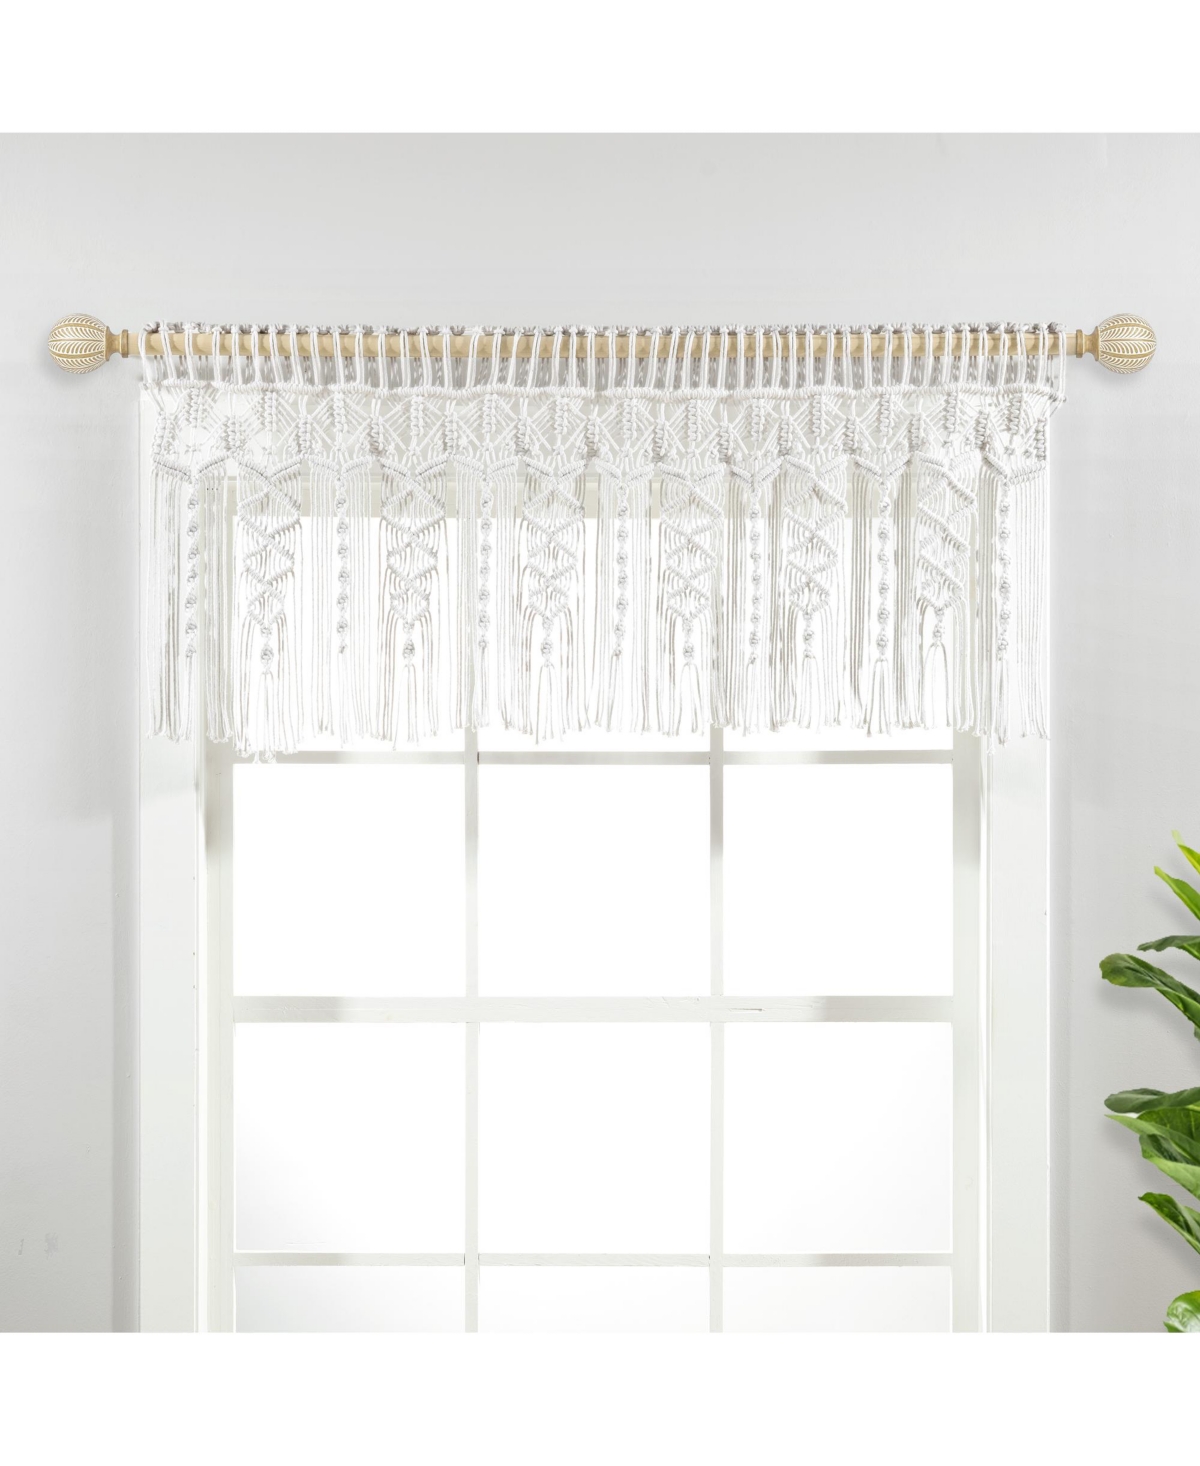 Boho Macrame Textured Cotton Valance/Kitchen Curtain/Wall Decor - Gray